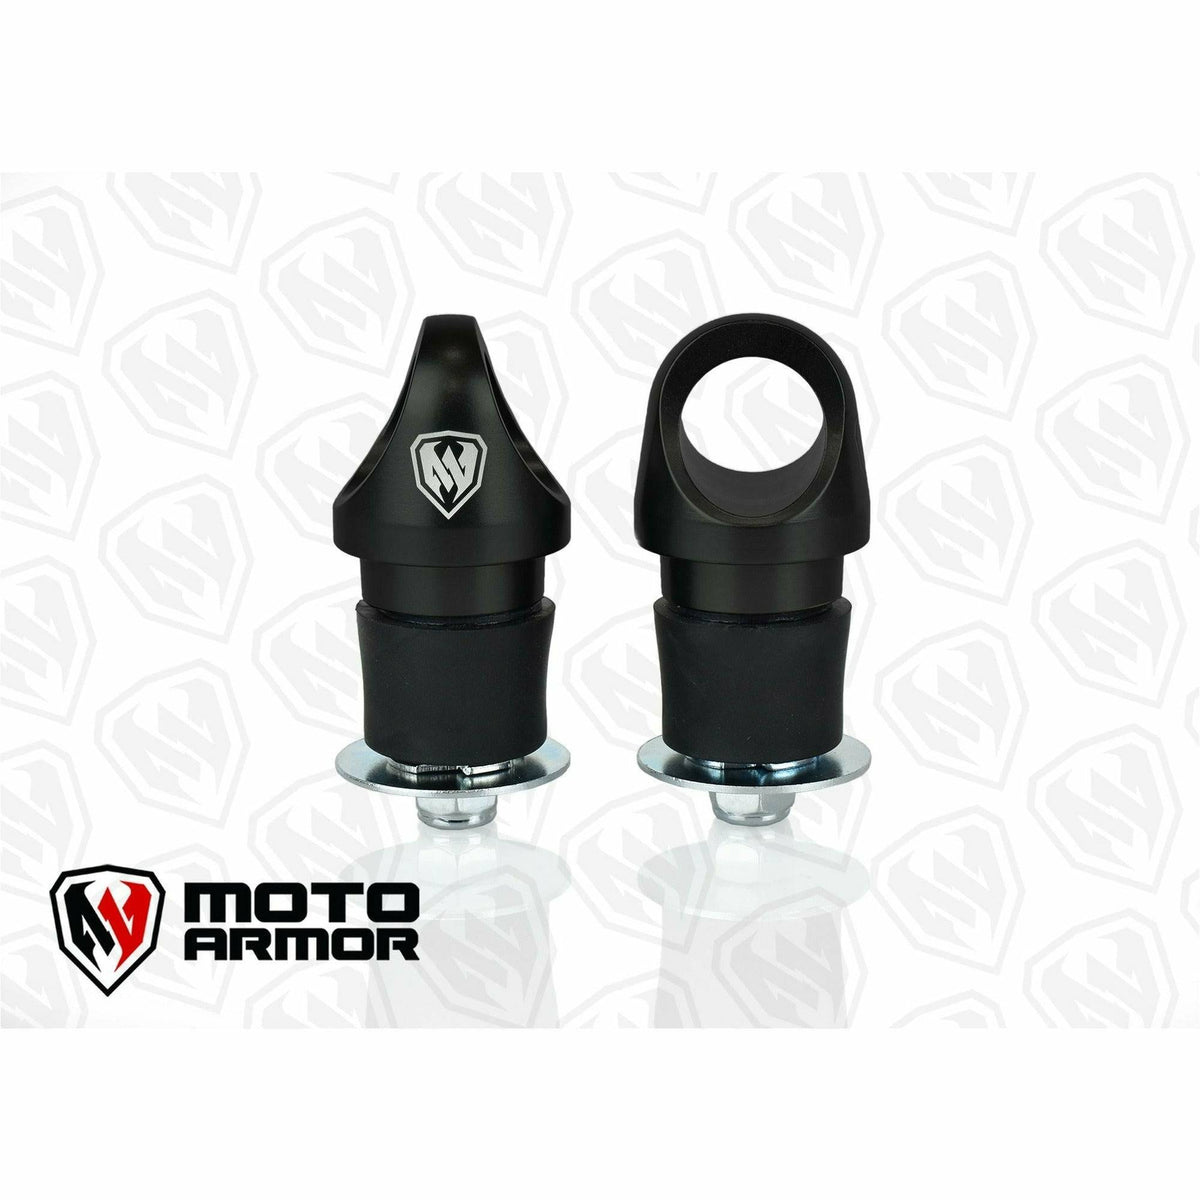 Moto Armor Polaris Billet Turn Lock Anchors (Pair)